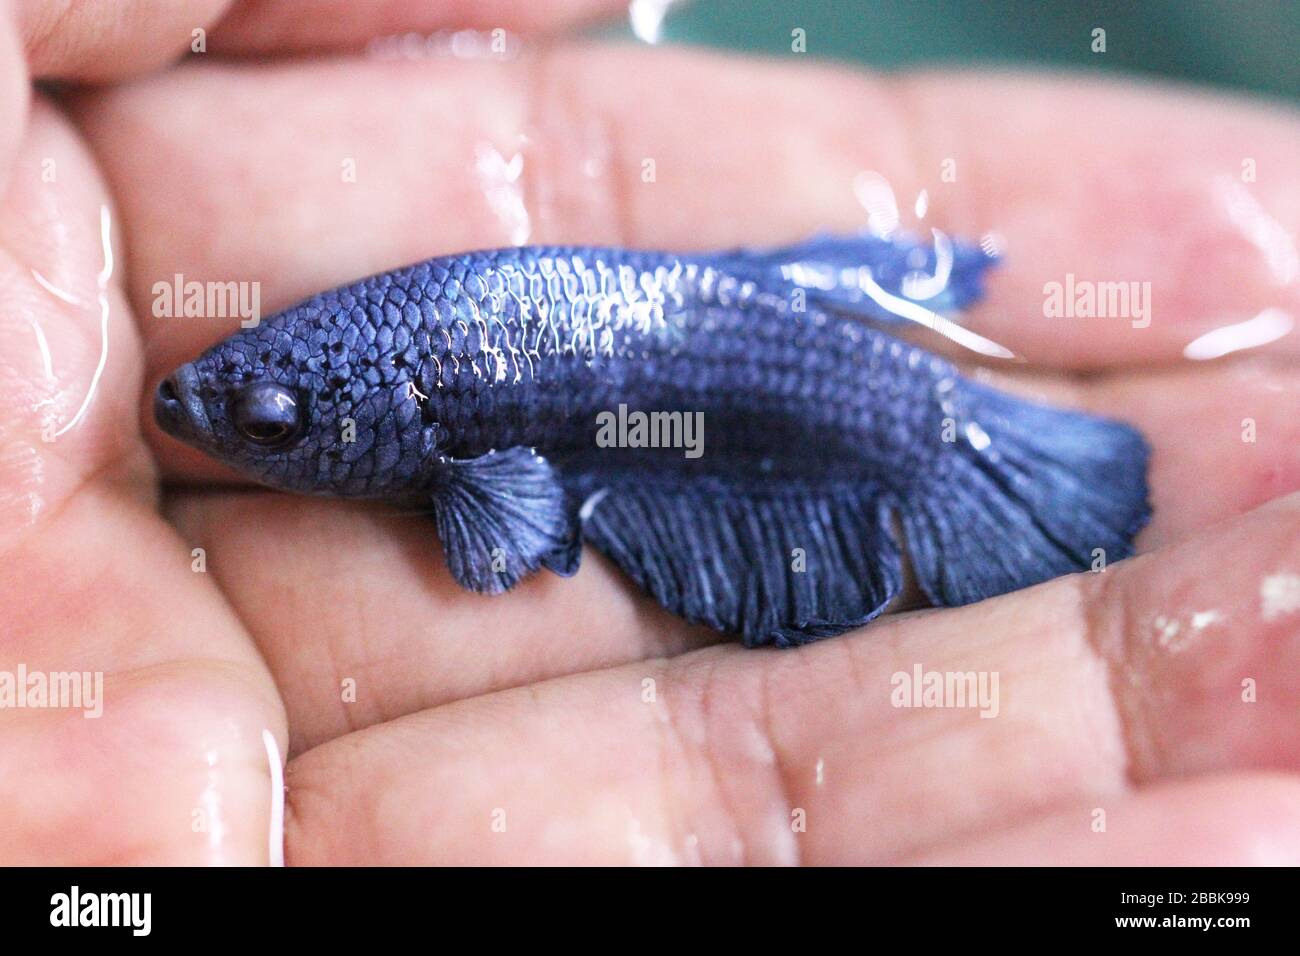 Betta Super Blue Halfmoon Plakat HMPK Male or Plakat Fighting Fish Splendens in Hand. Stock Photo